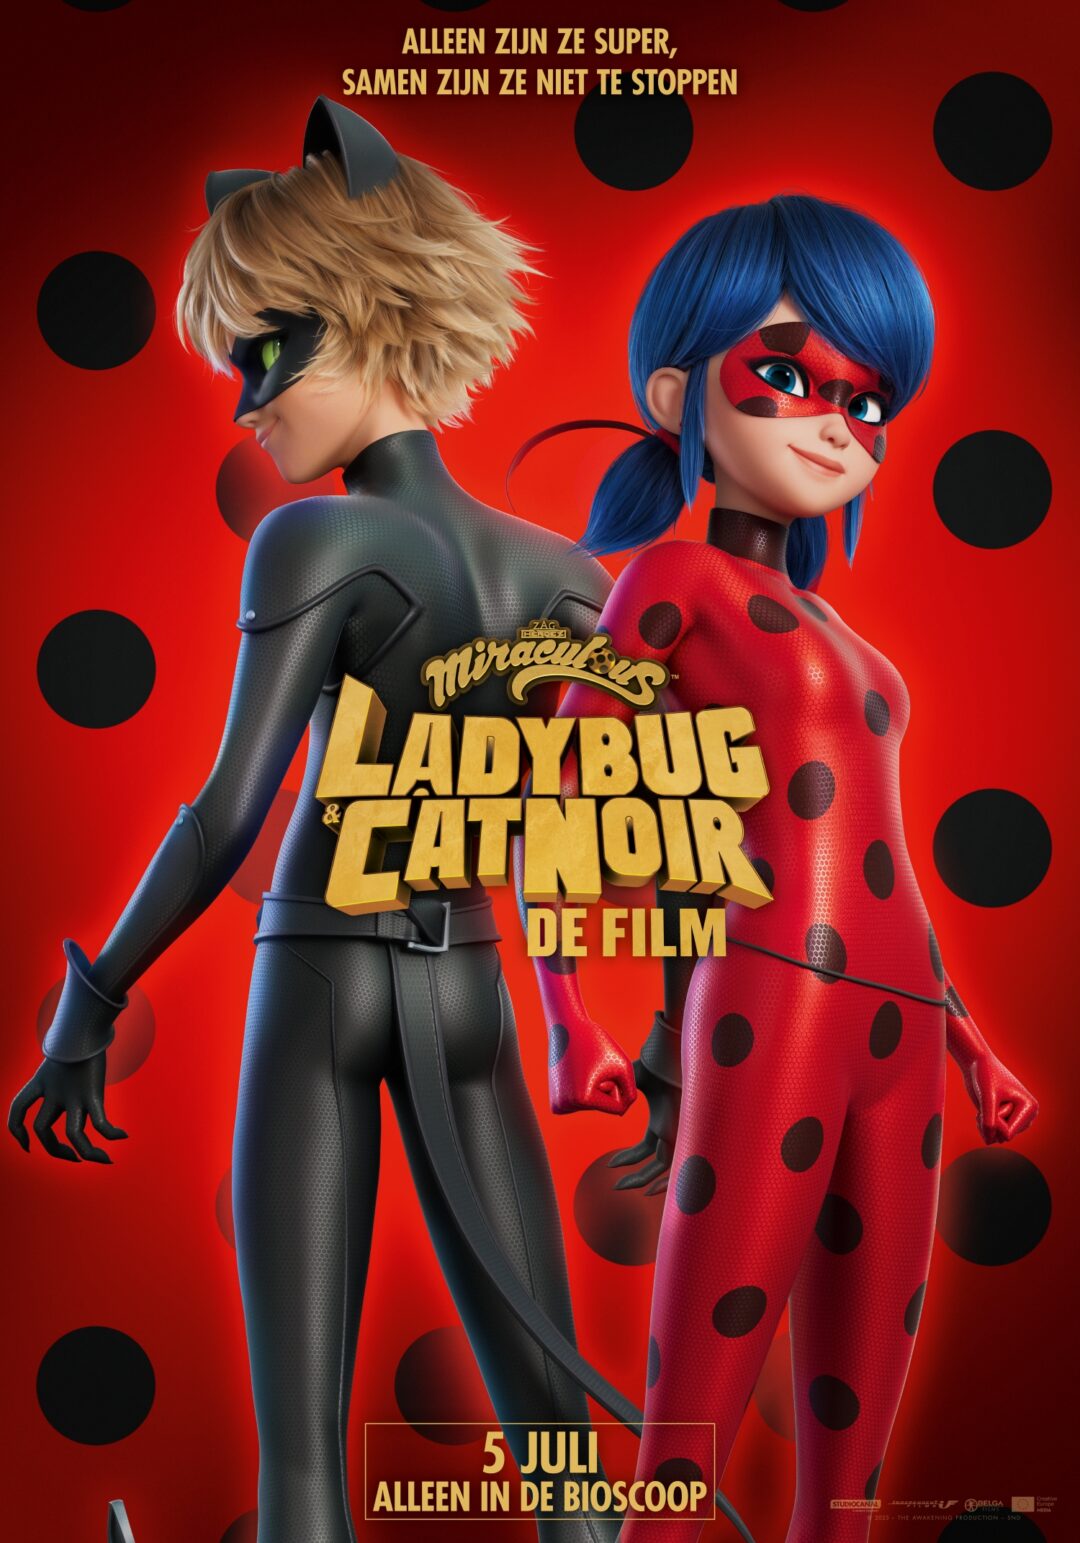 Ladybug-Cat-Noir_-De-Film-NL-_ps_1_jpg_sd-high.jpg